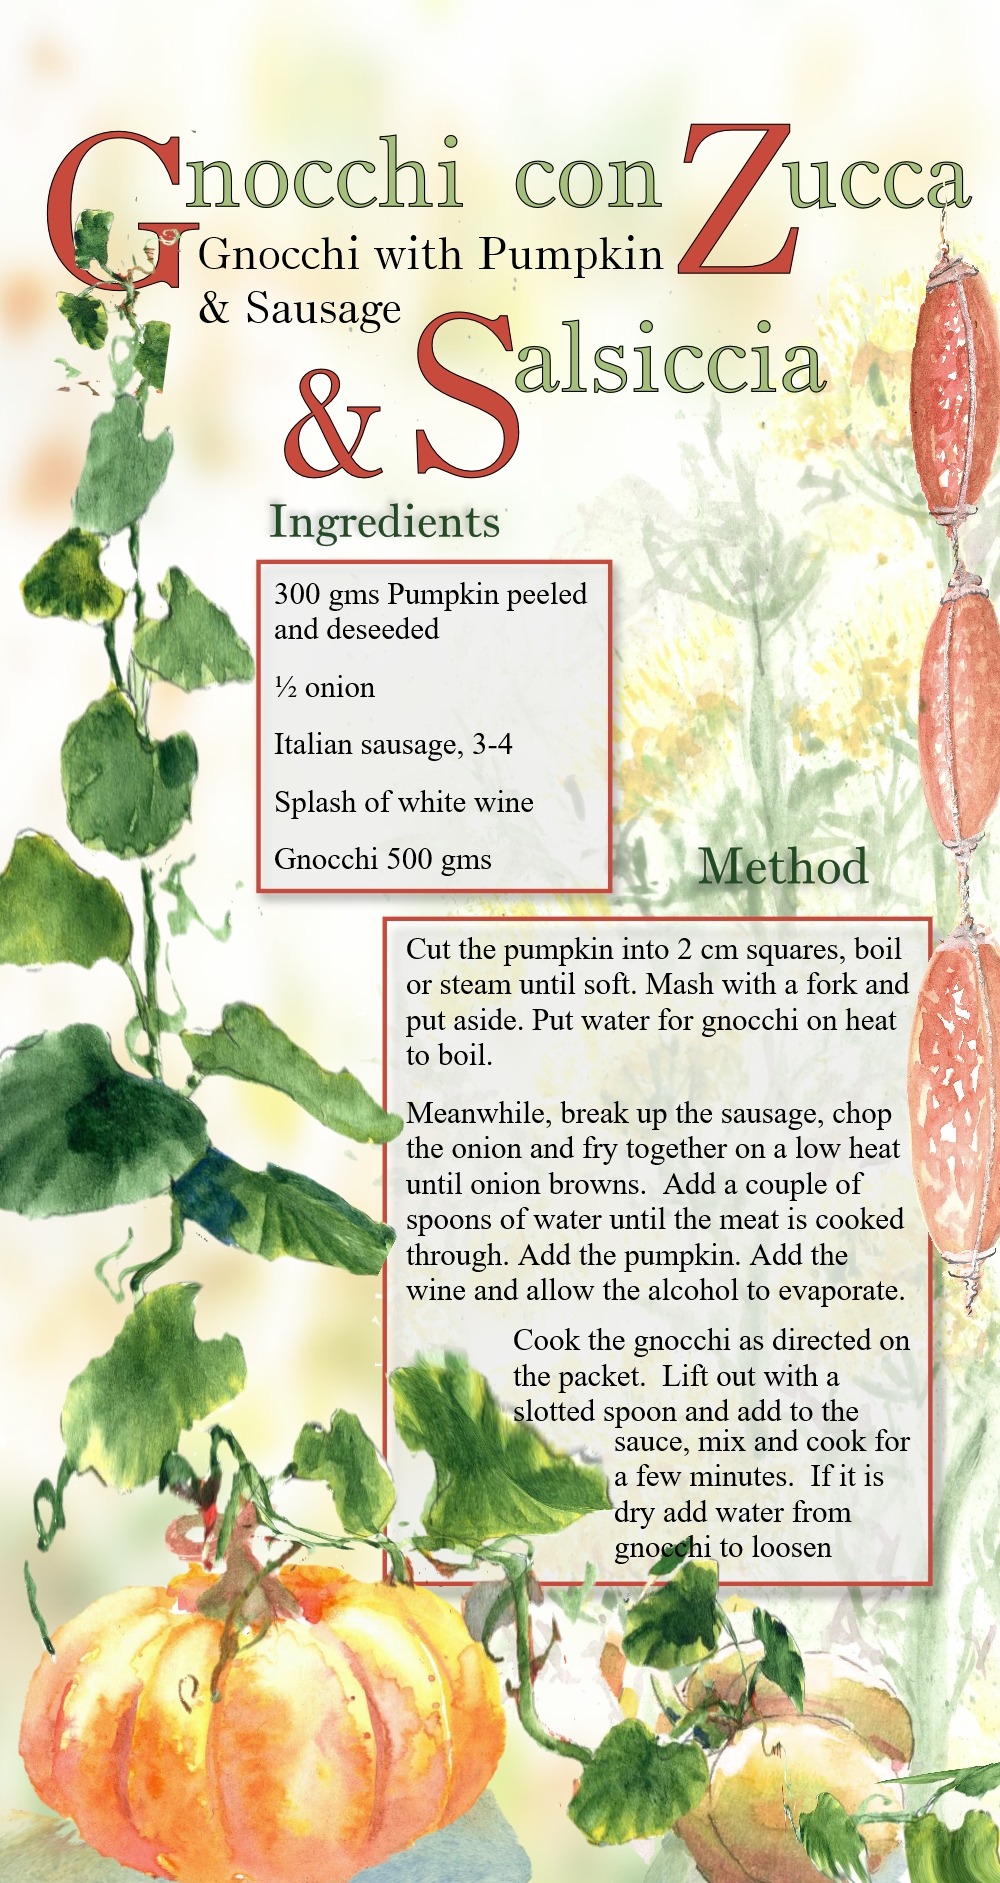 Gnocchi with salsicia and Pumpkin, Recipe card, no ads